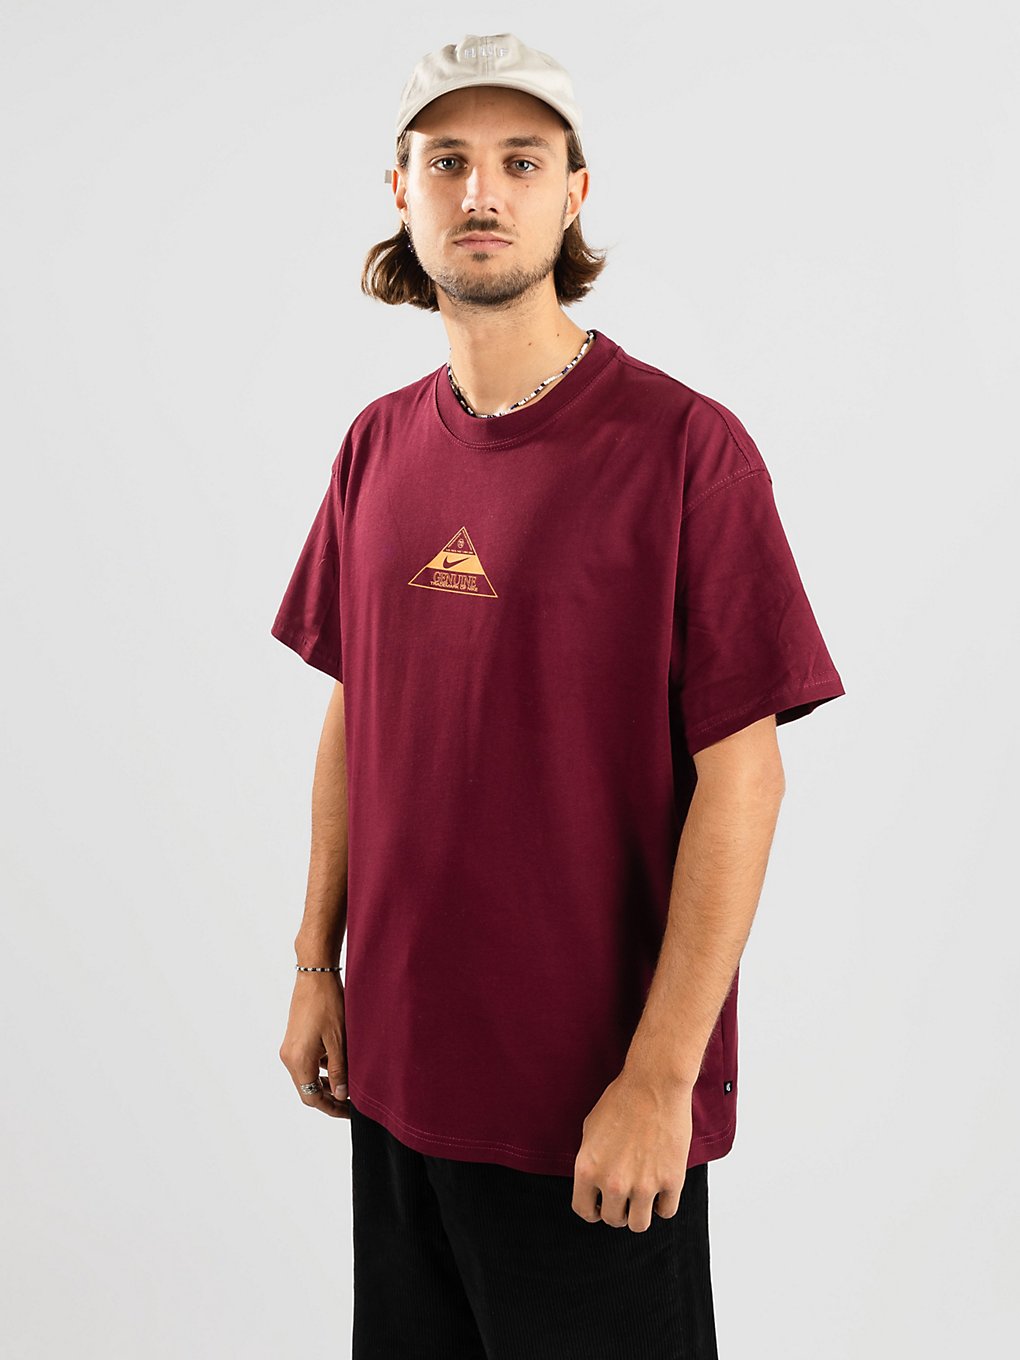 Nike SB Trademark T-Shirt dark beetroot kaufen